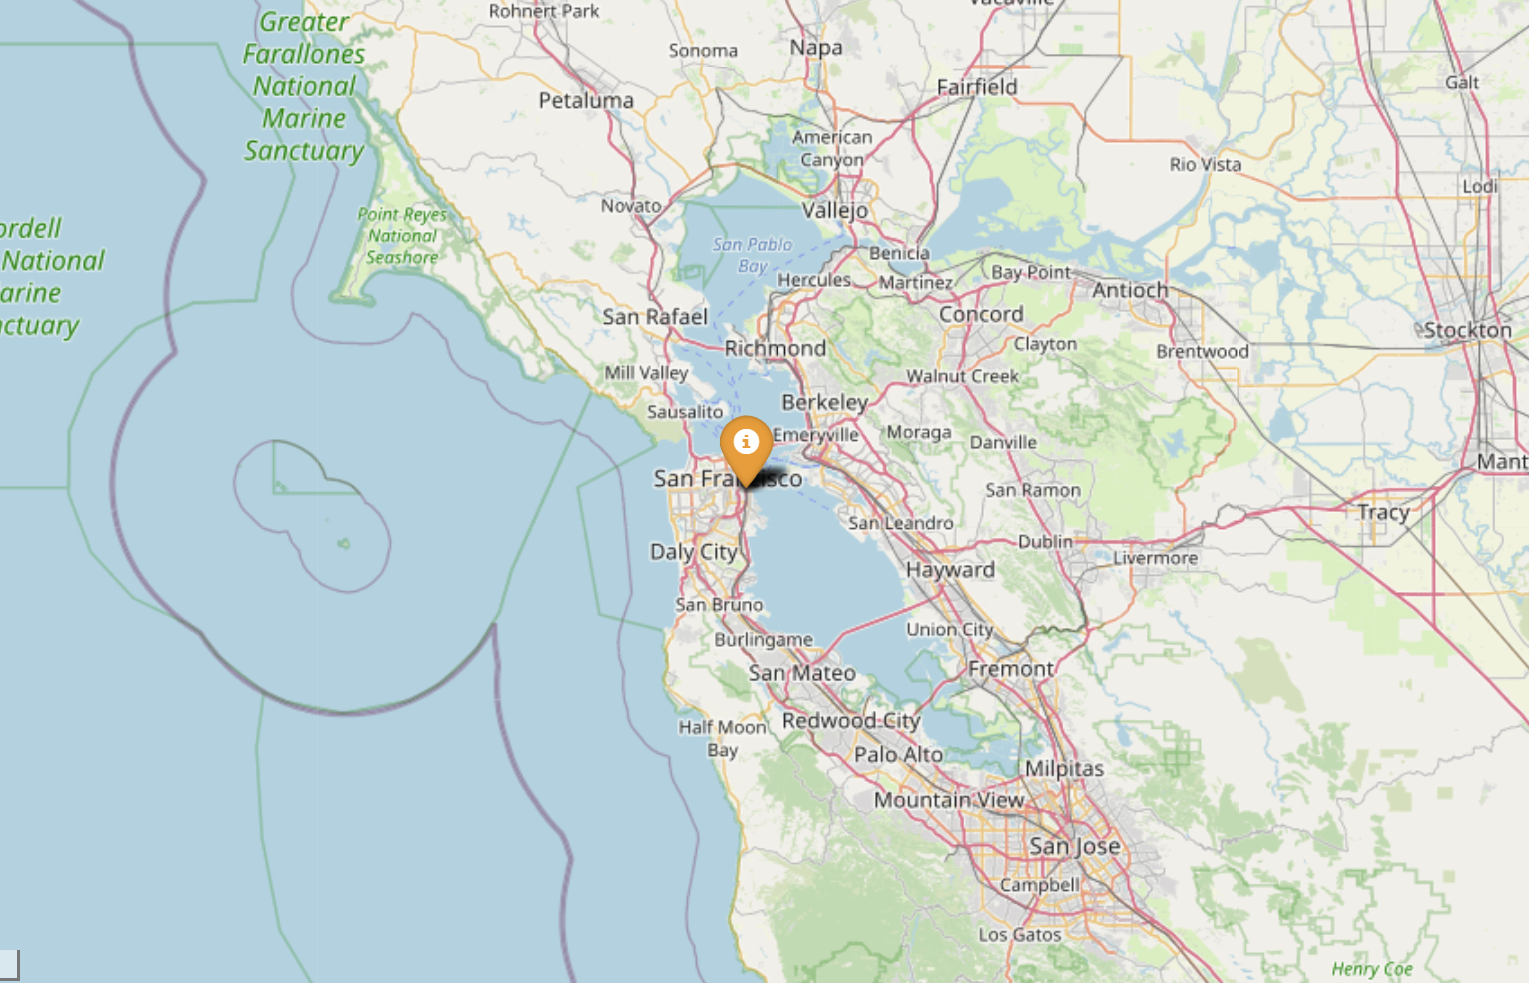 Folium interactive map zoomed into San Francisco area